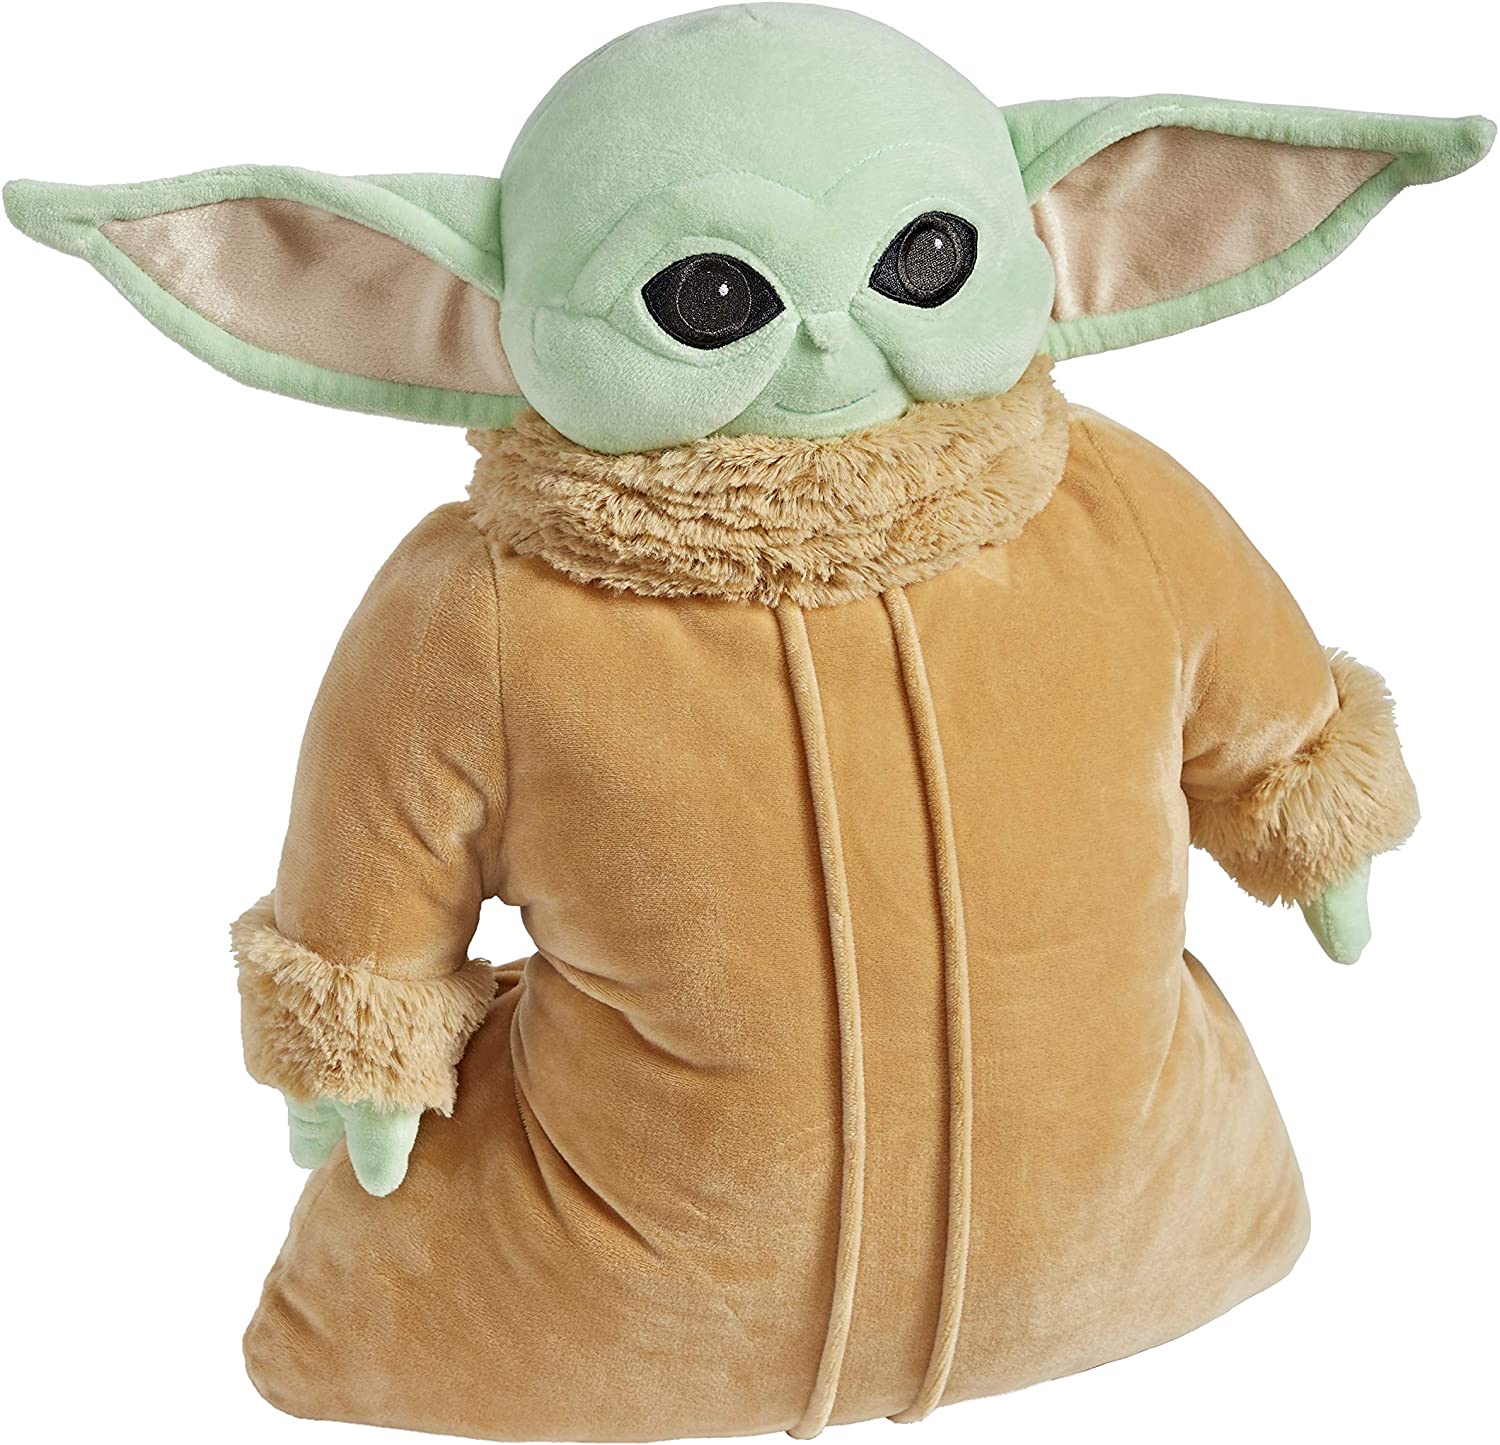 Pillow Pets Disney Star Wars The Mandalorian Baby Yoda The Child Plush Toy $13.40 + Free Shipping